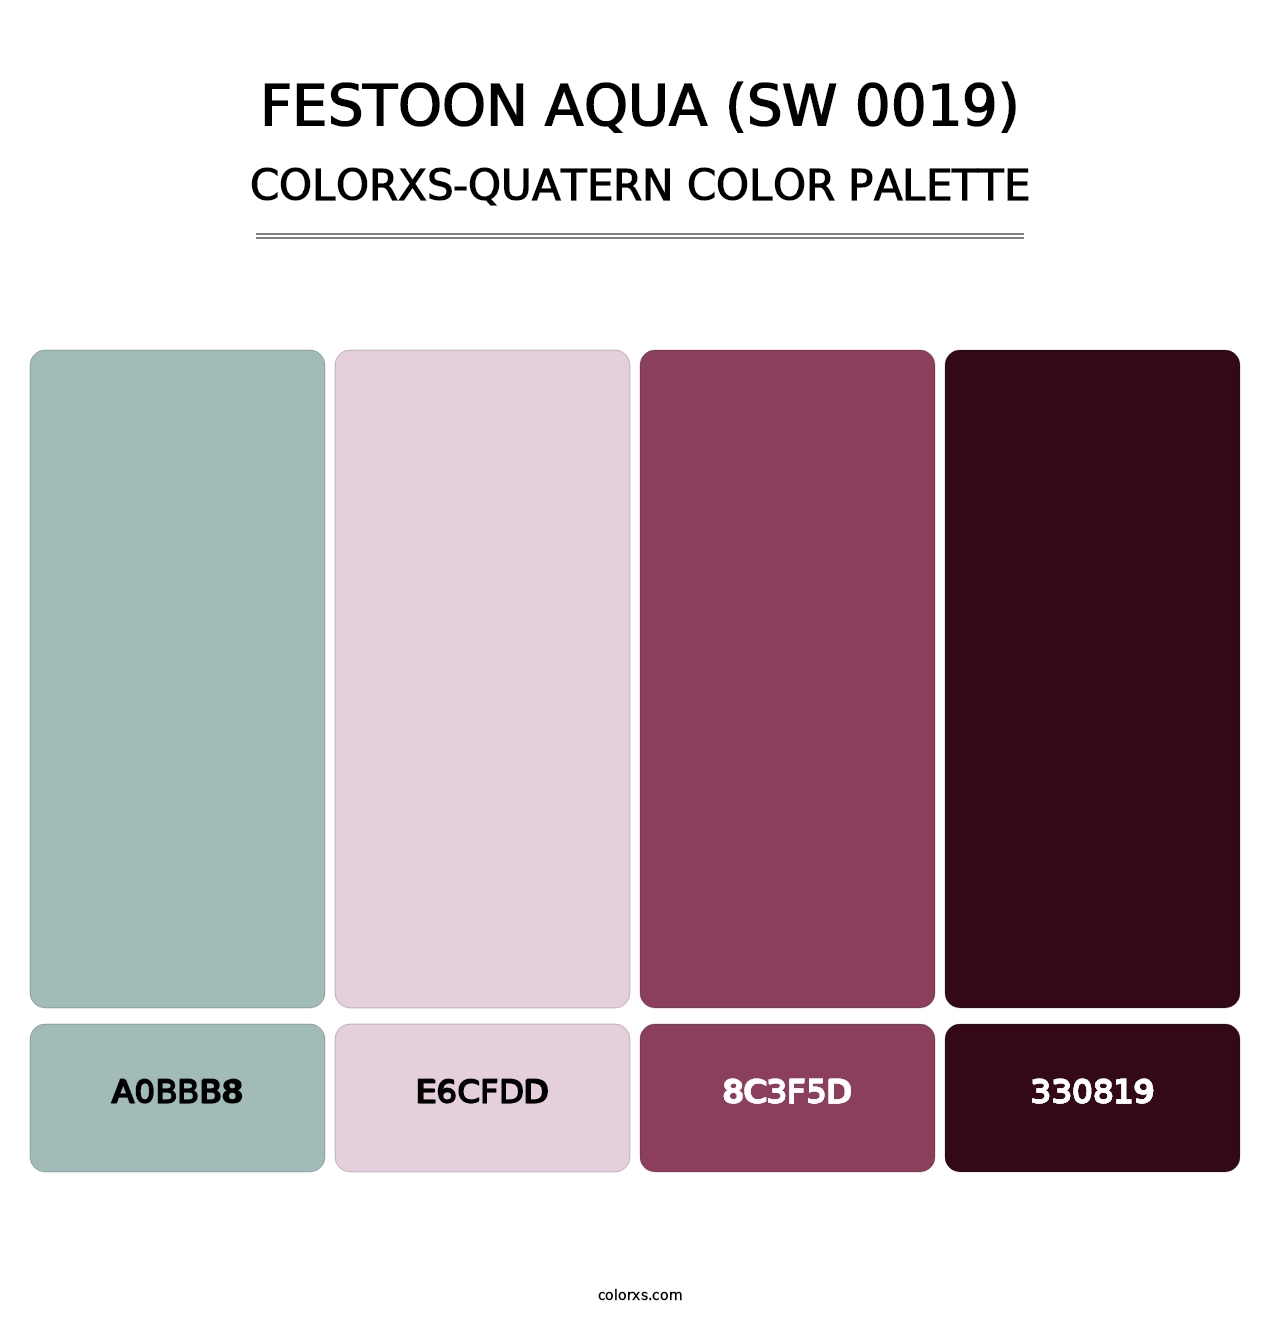 Festoon Aqua (SW 0019) - Colorxs Quatern Palette